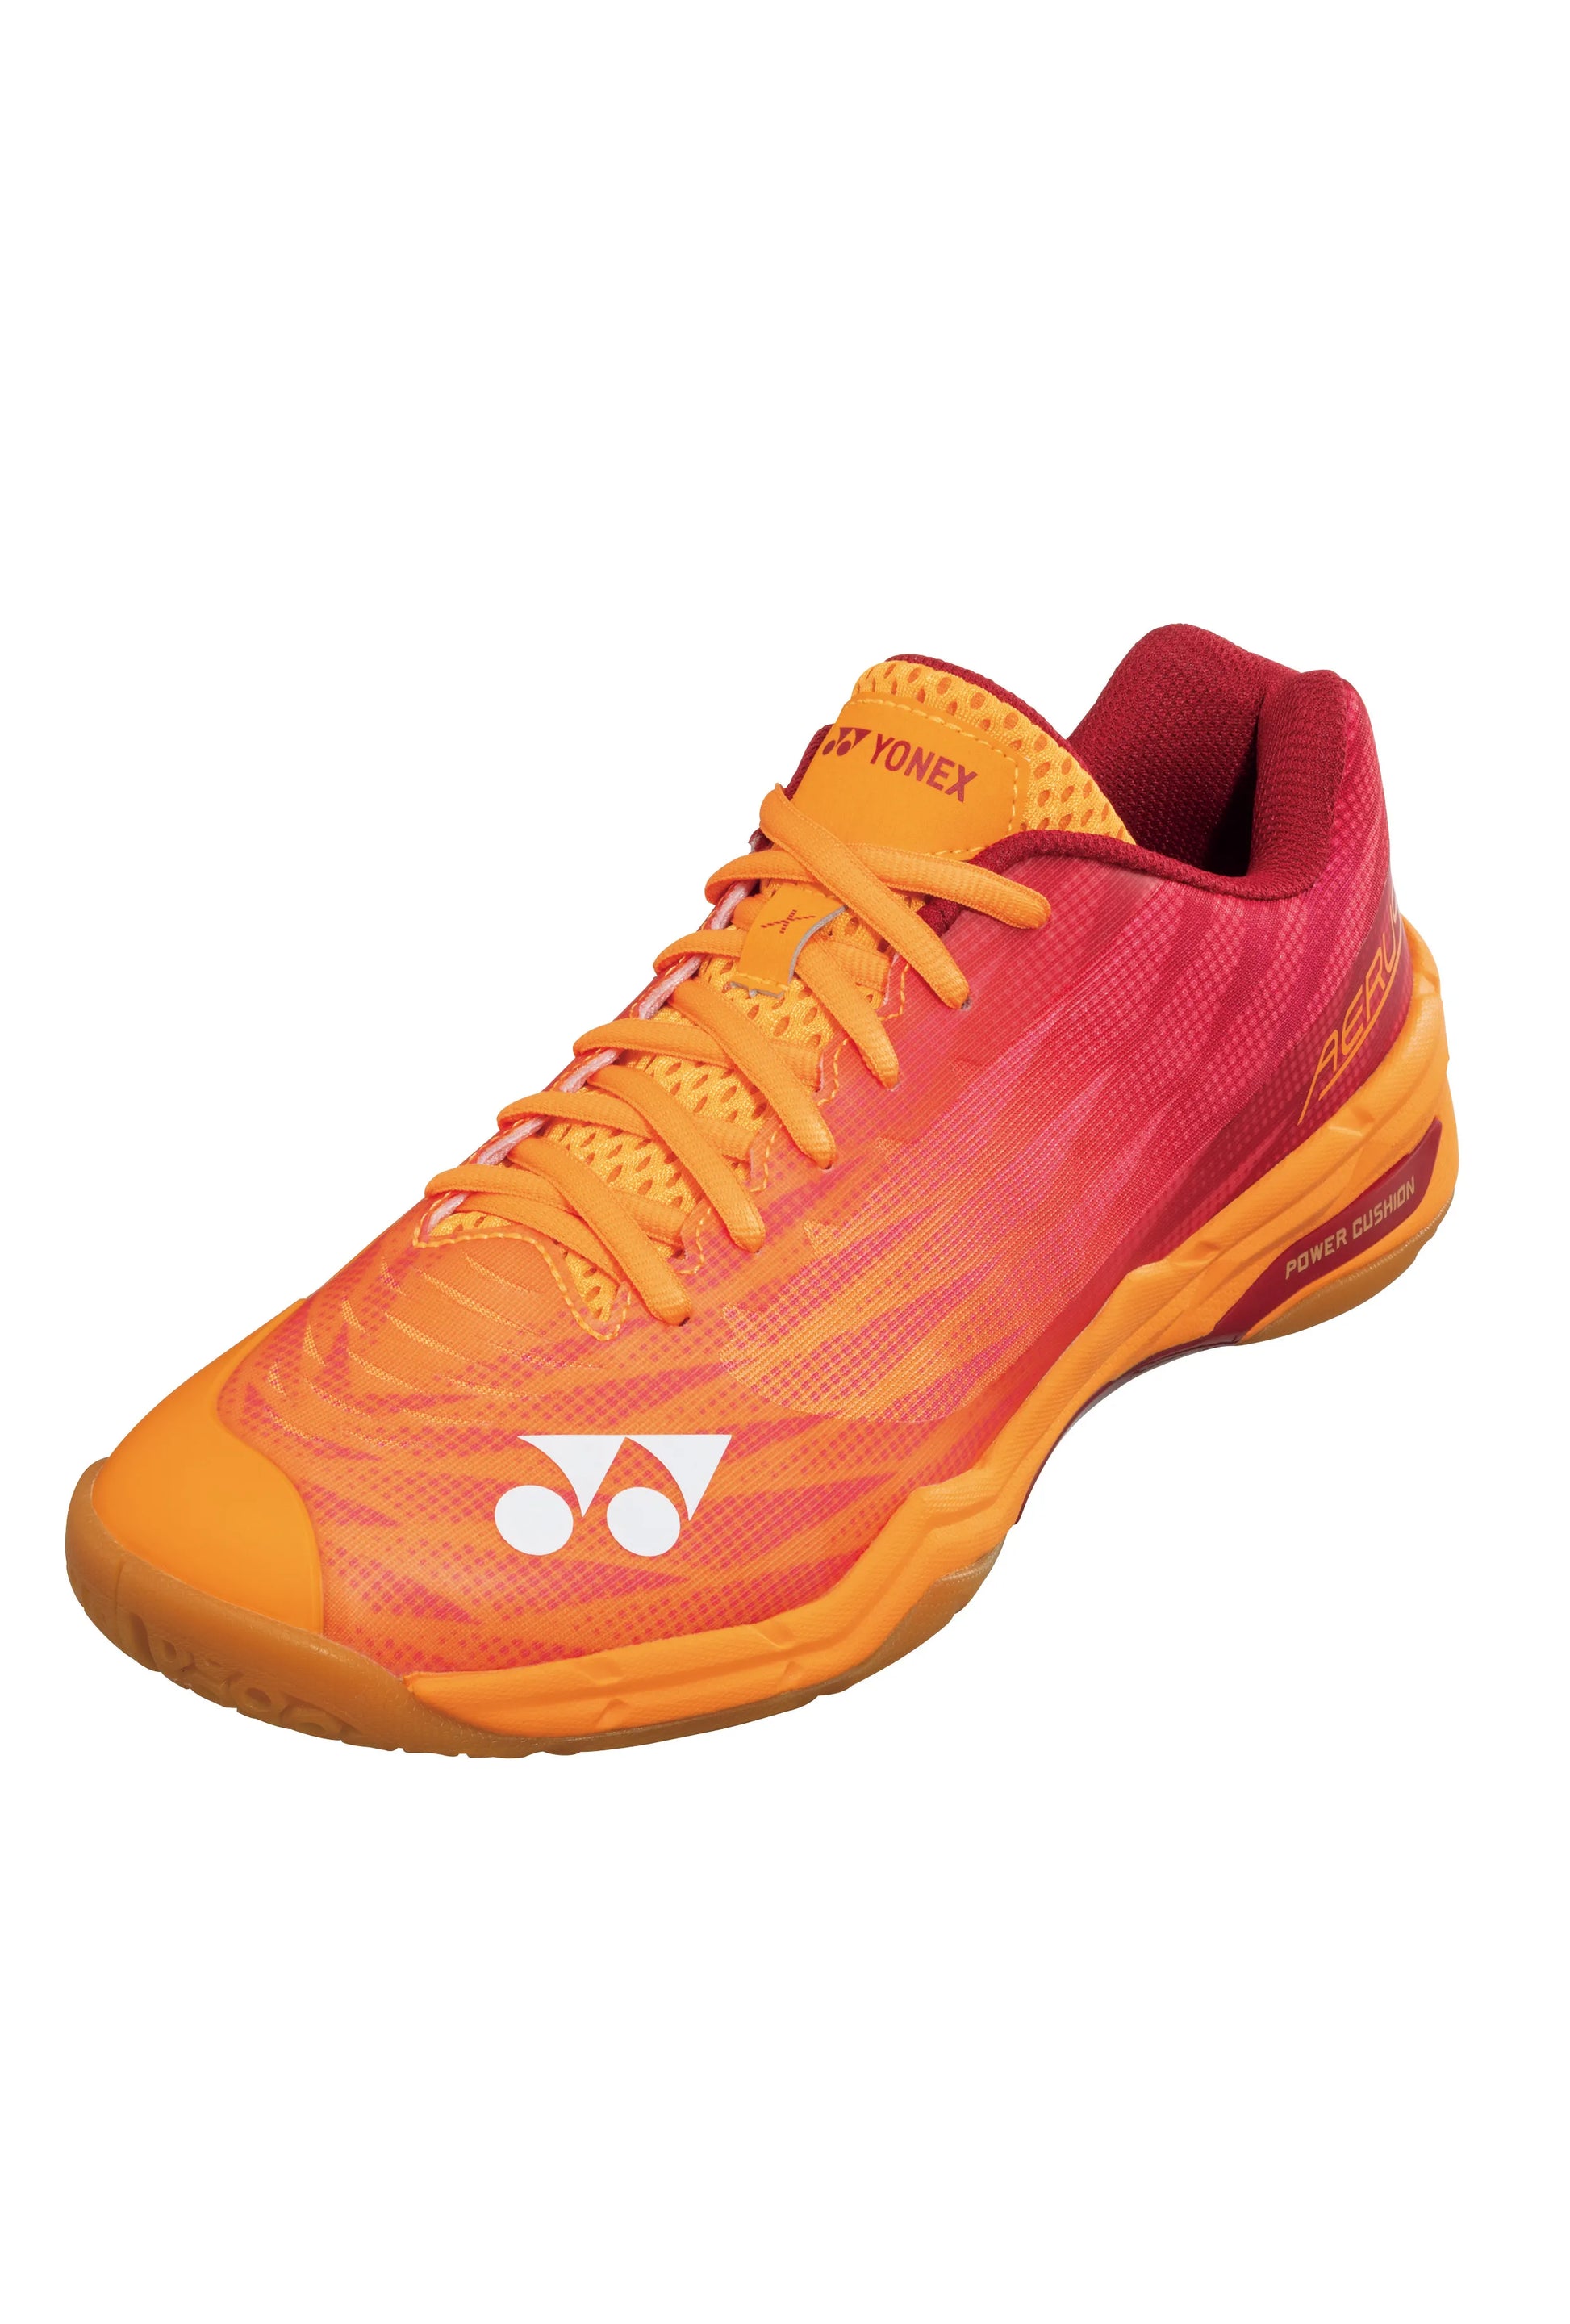 YONEX POWER CUSHION AERUS X2 MENS [Orange Red] - Max Sports